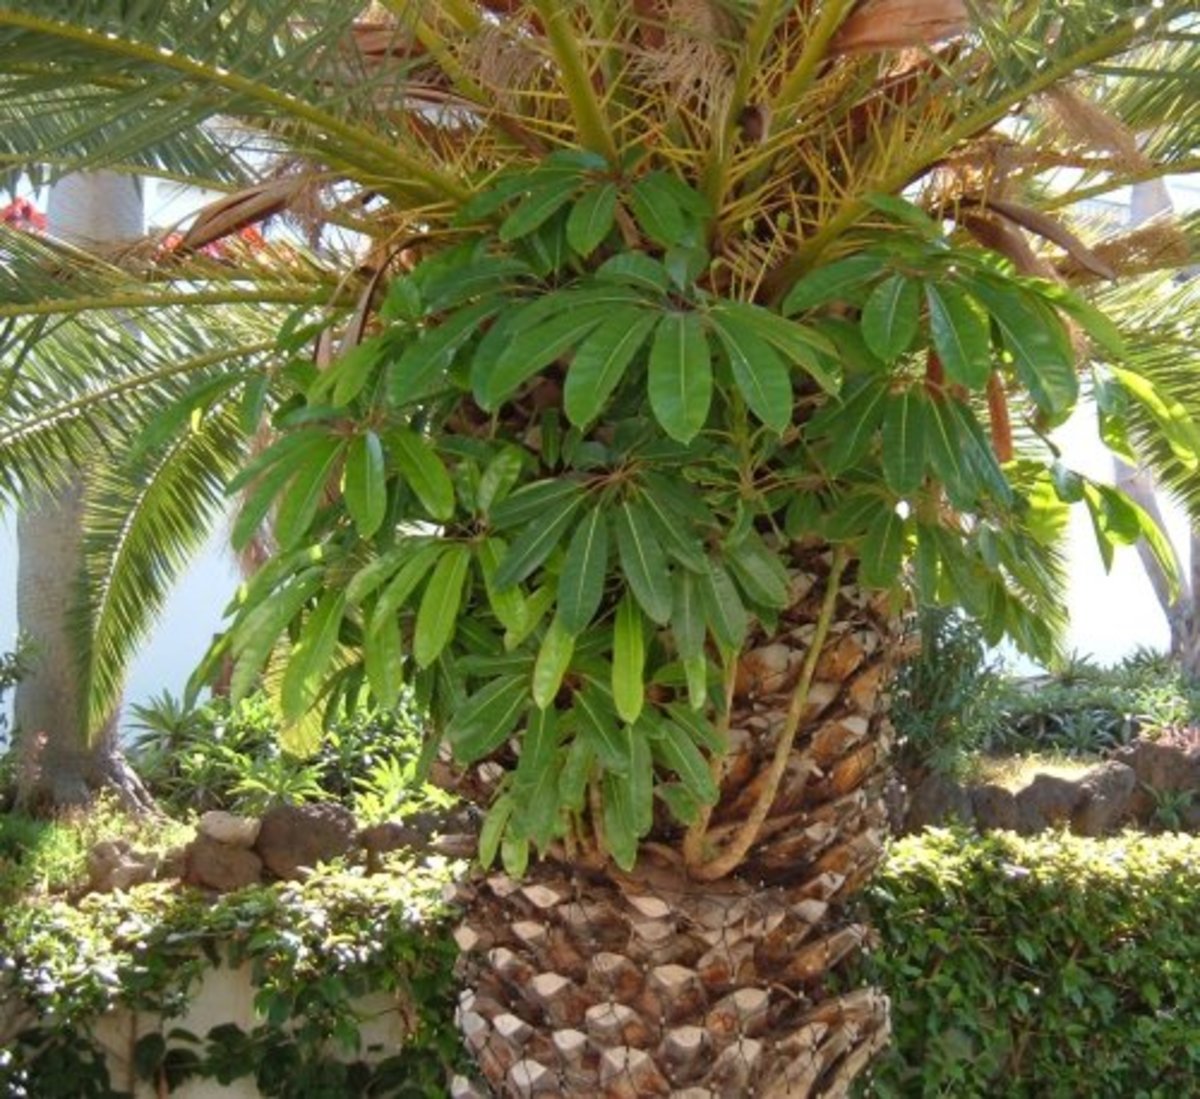 Australian Umbrella Tree growing in a palm tree